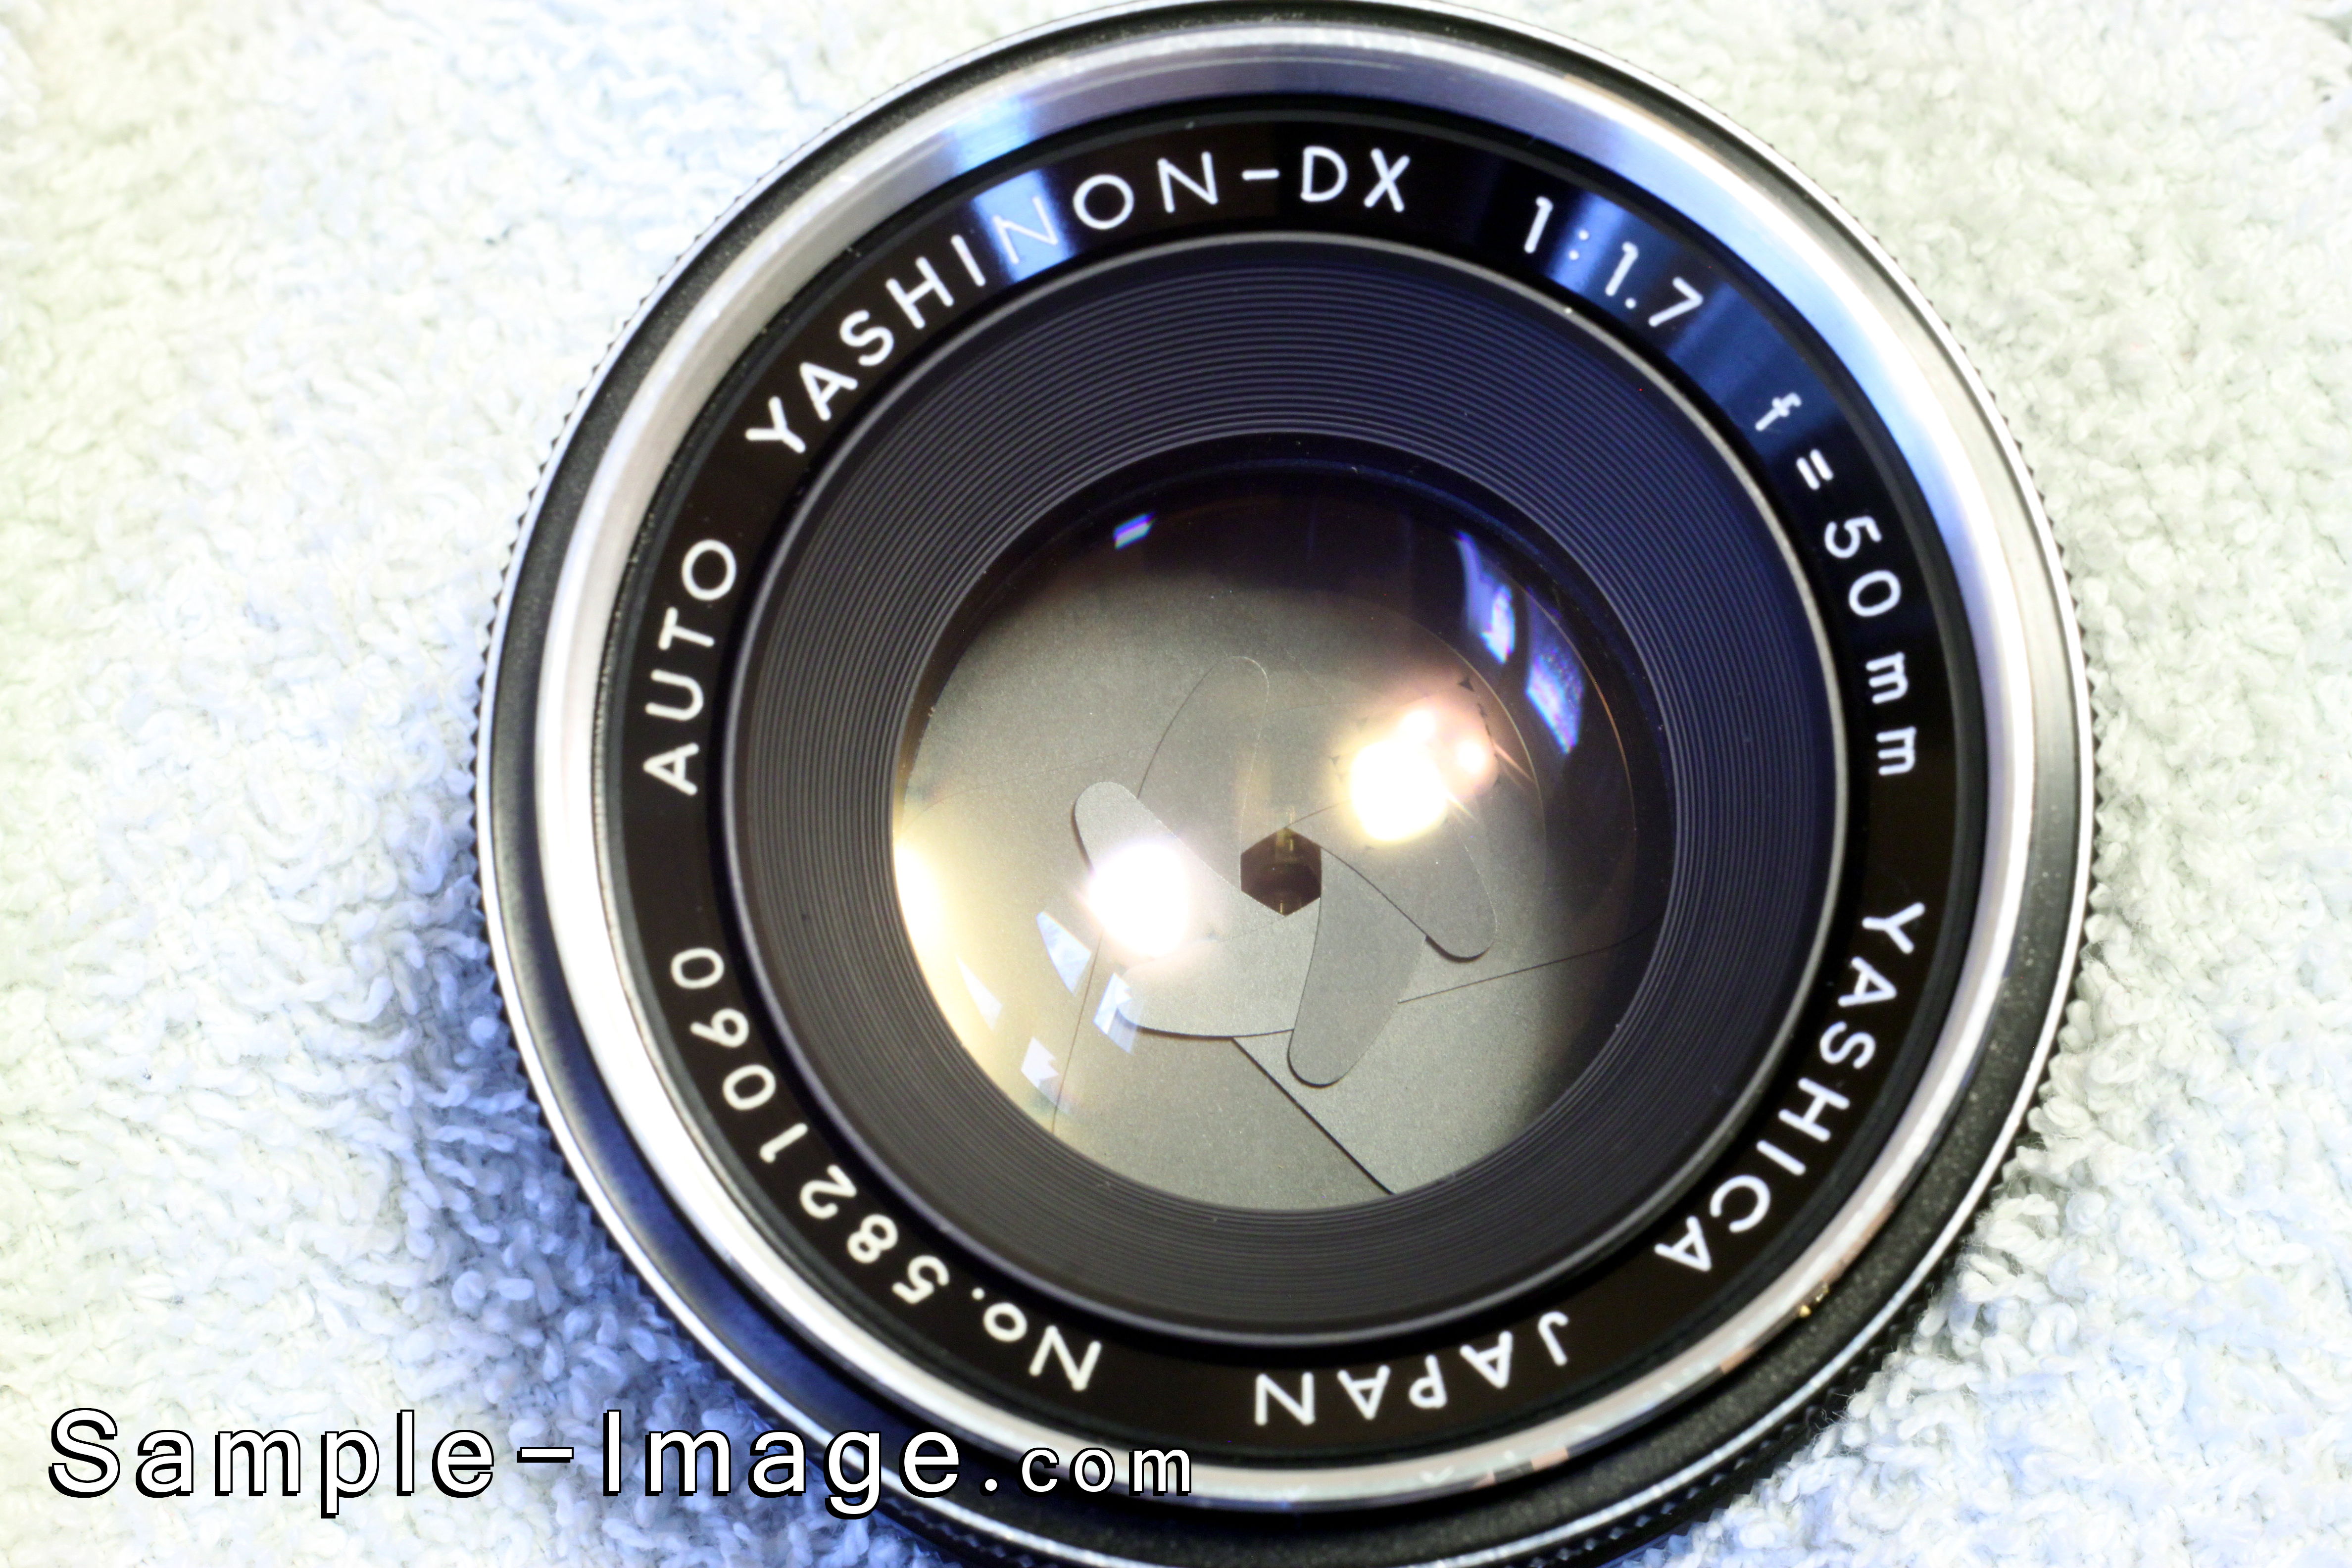 Yashica Auto Yashinon-DX 50mm f/1.7 – Sample-Image.com